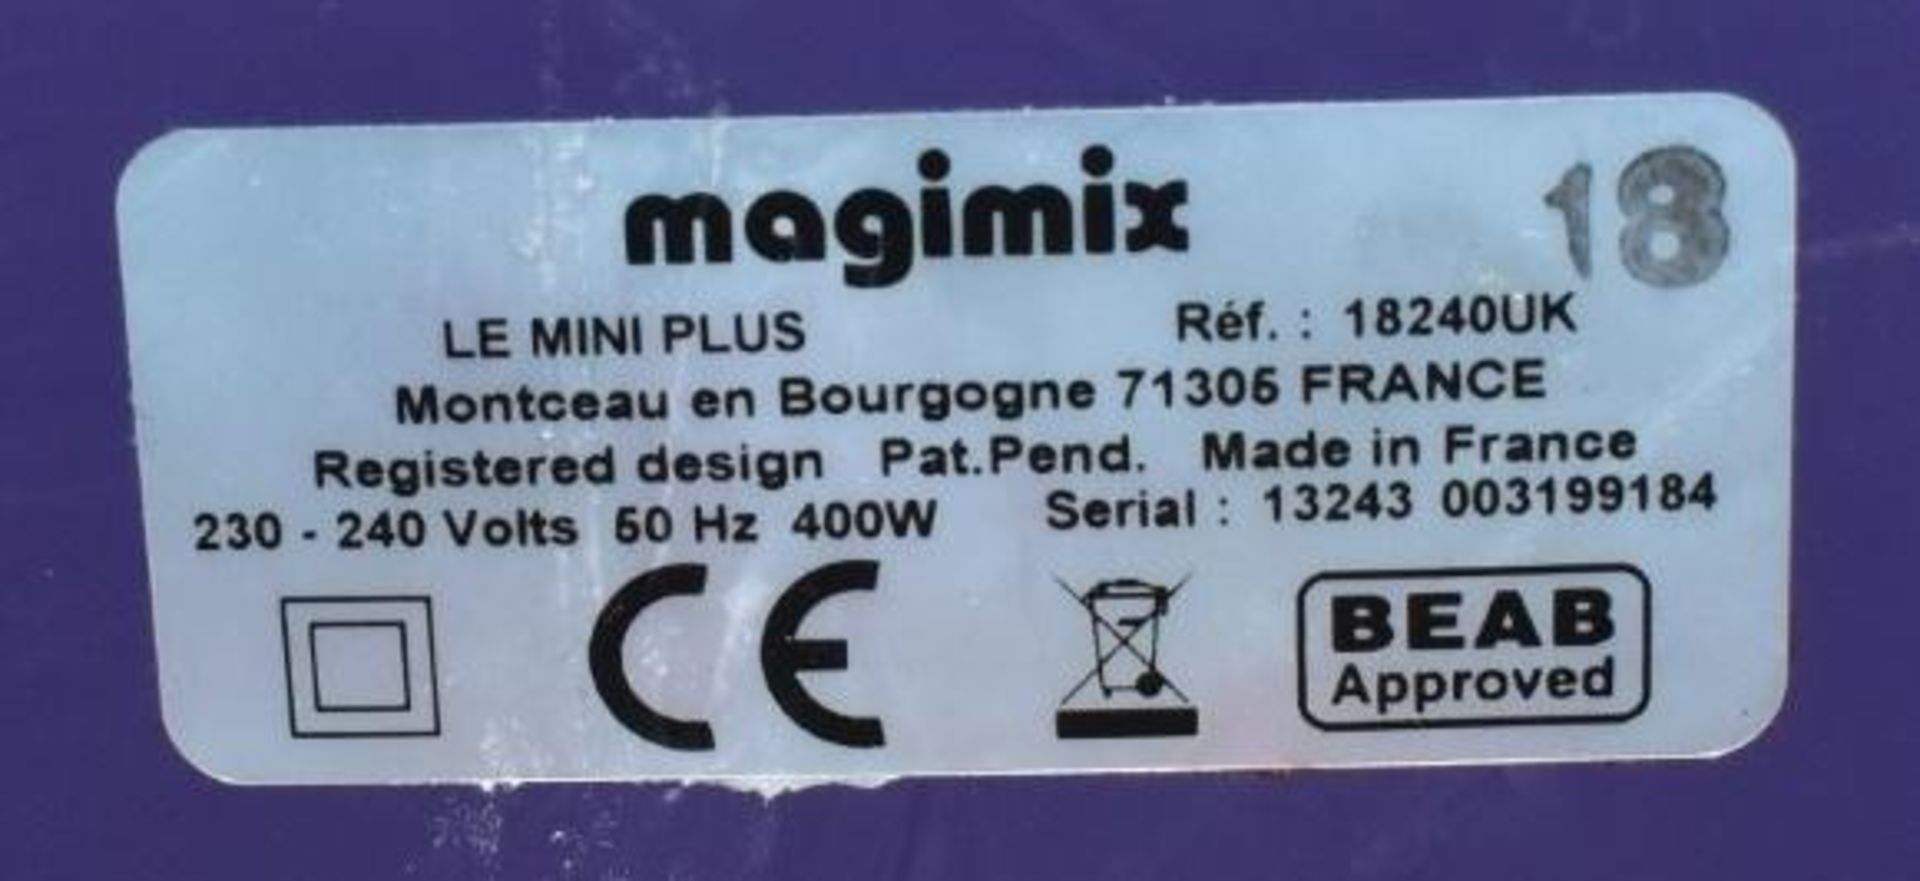 1 x Megamix Mini Plus Food Mixer With Accessories - Model 18240 - CL489 - Location: Putney, - Image 2 of 3